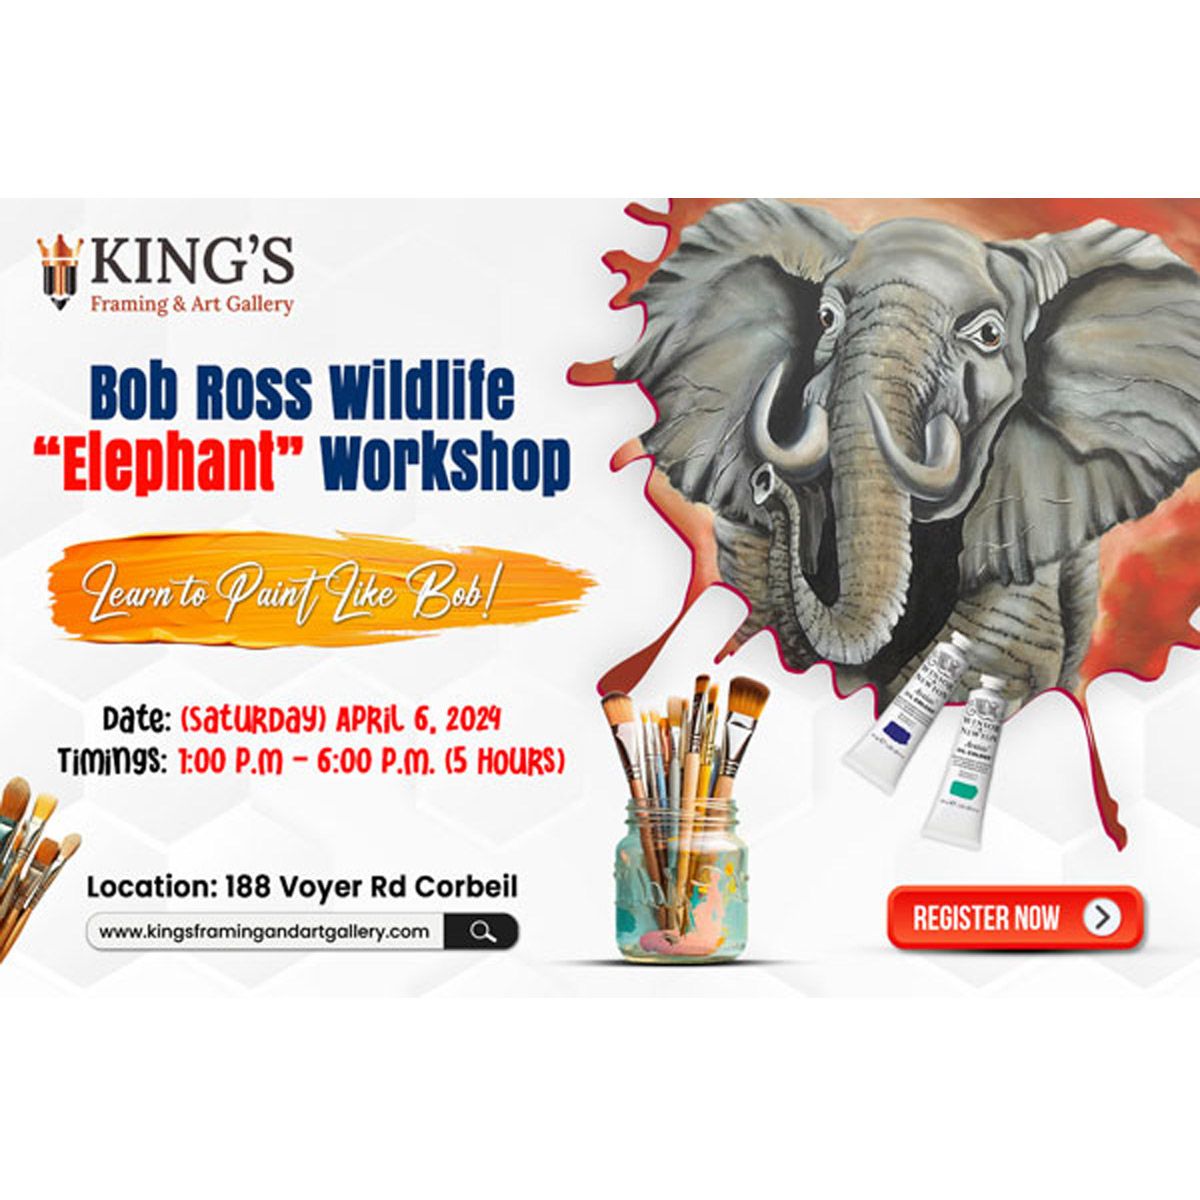 Bob Ross Wildlife “Elephant” Workshop April 6, 2024